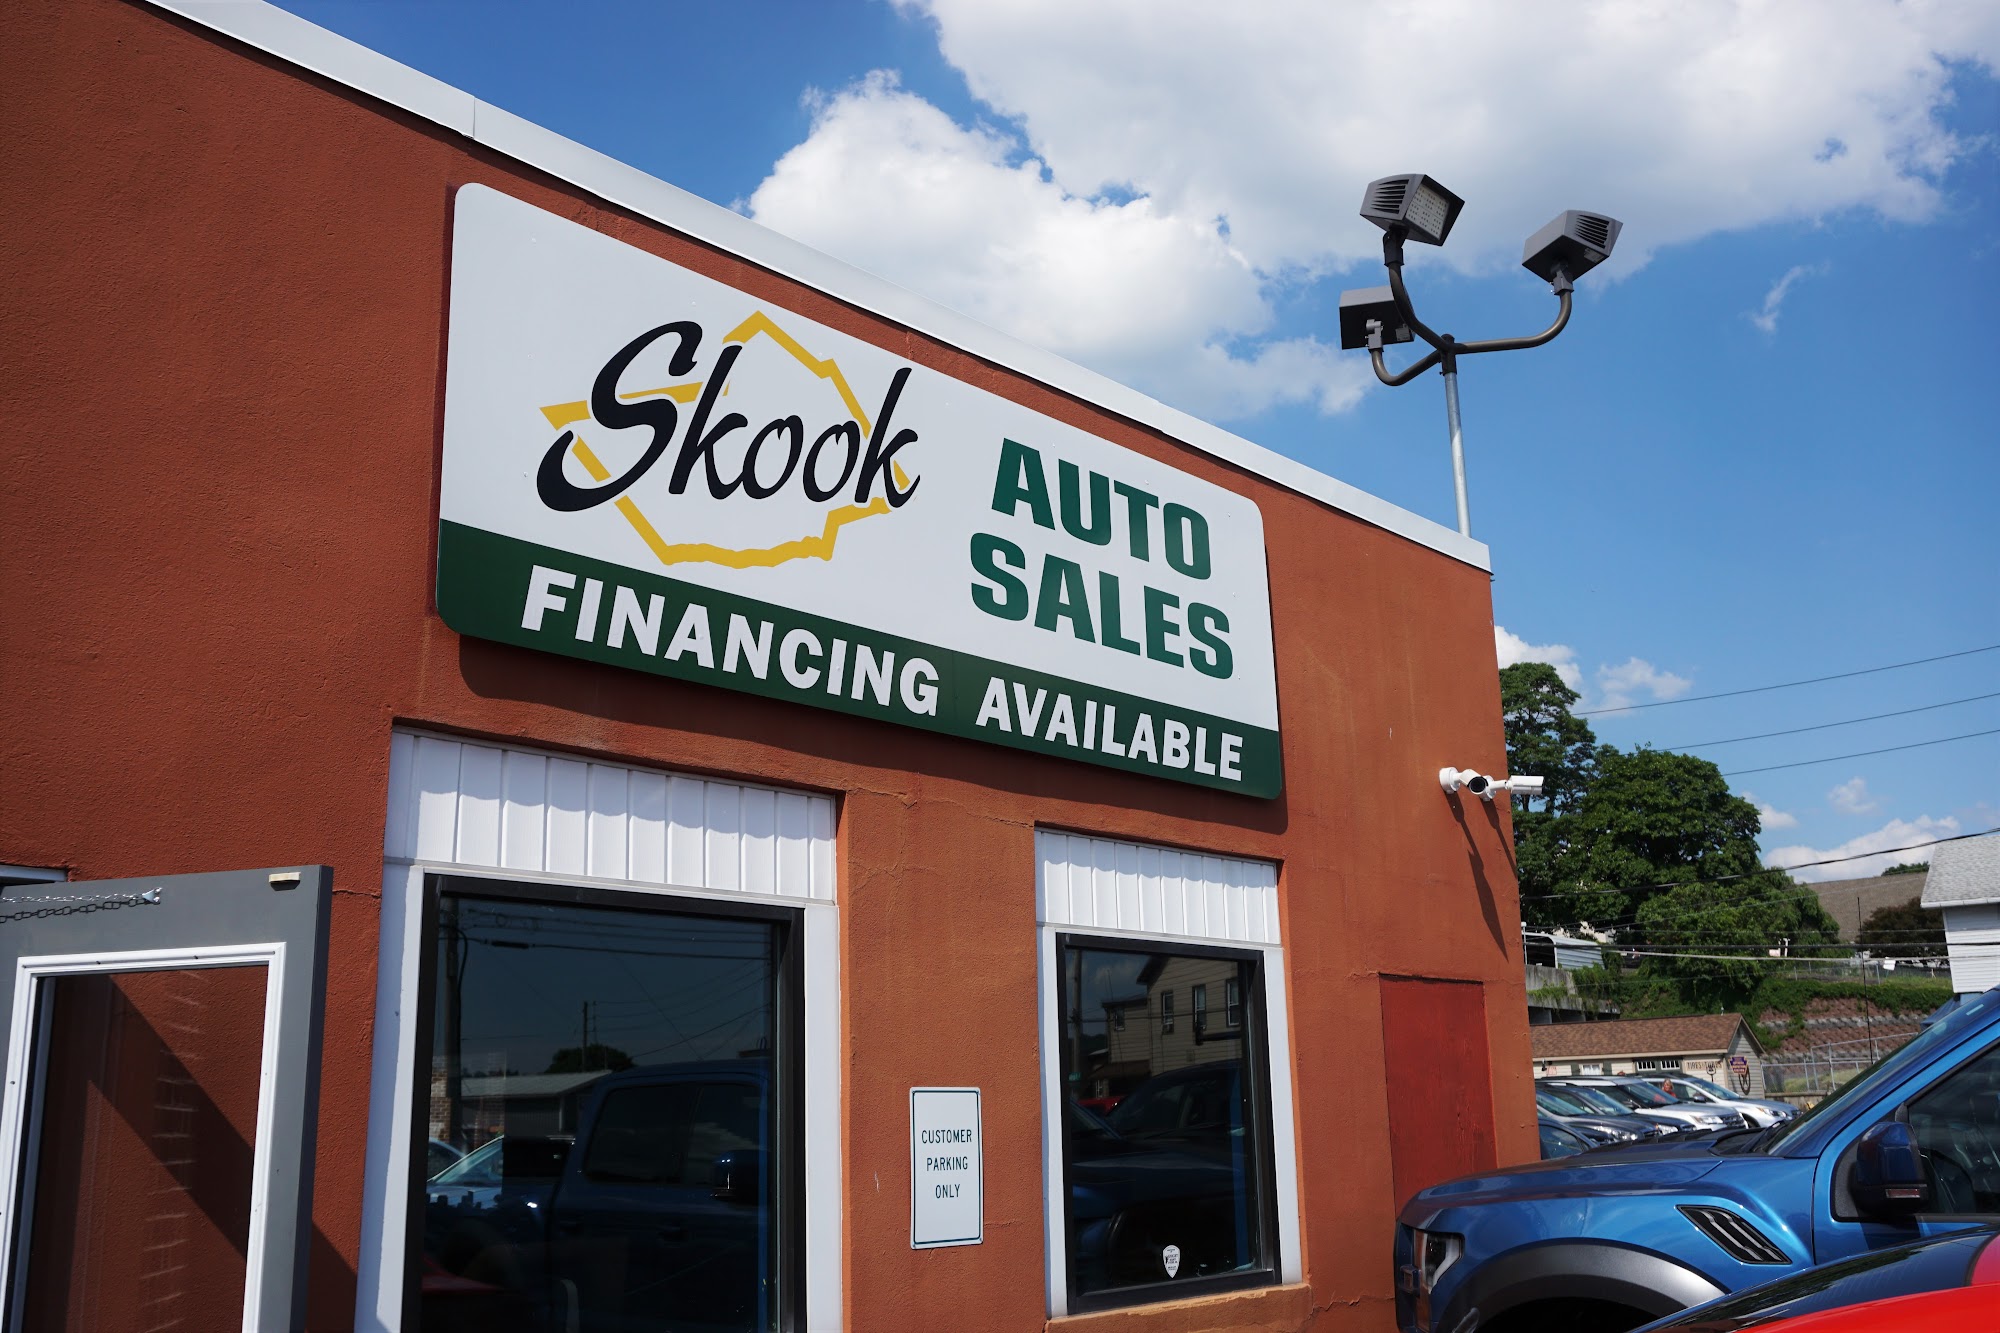 Skook Auto Sales